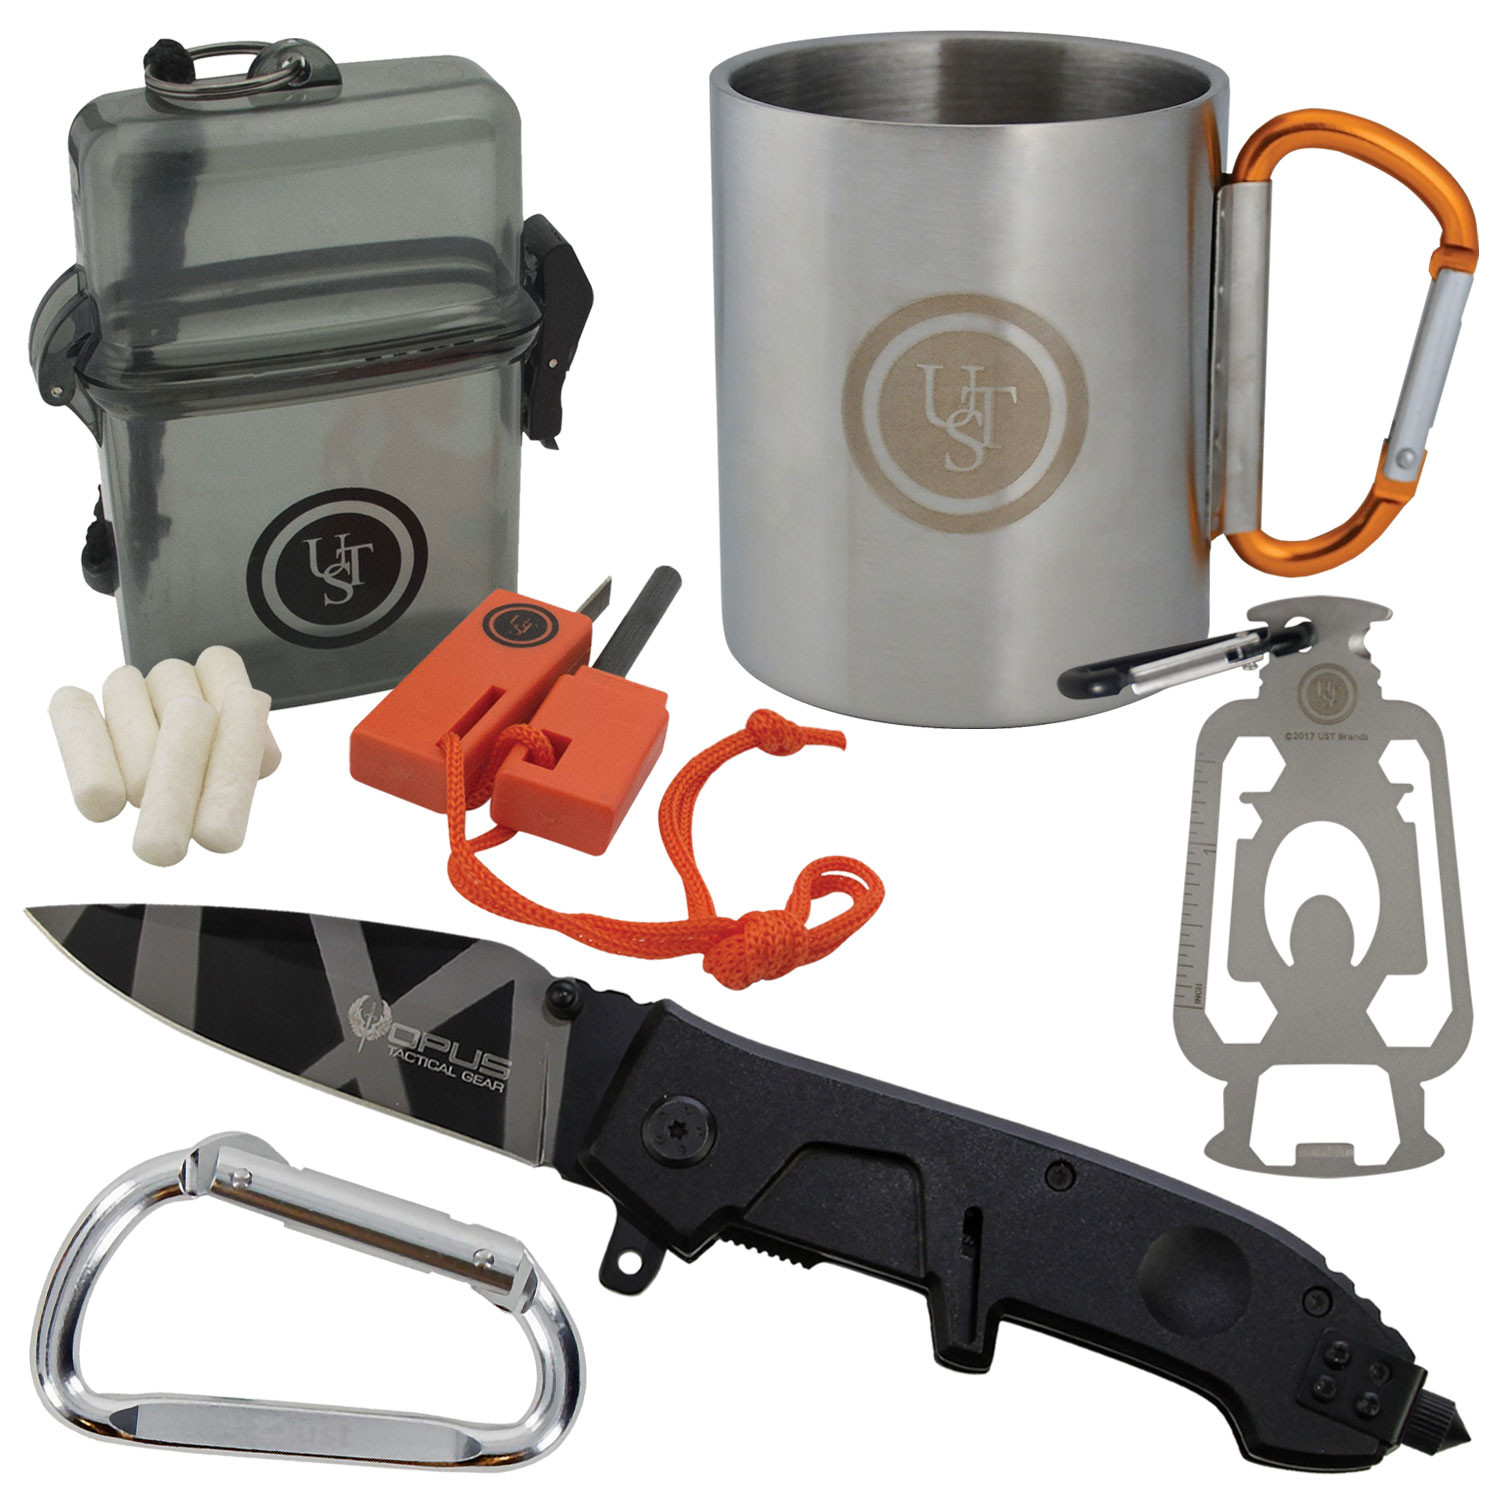 Outdoor Survival Kit (Folding Knife, Flint Fire Kit, Mug & More) $19.99 + Free Shipping